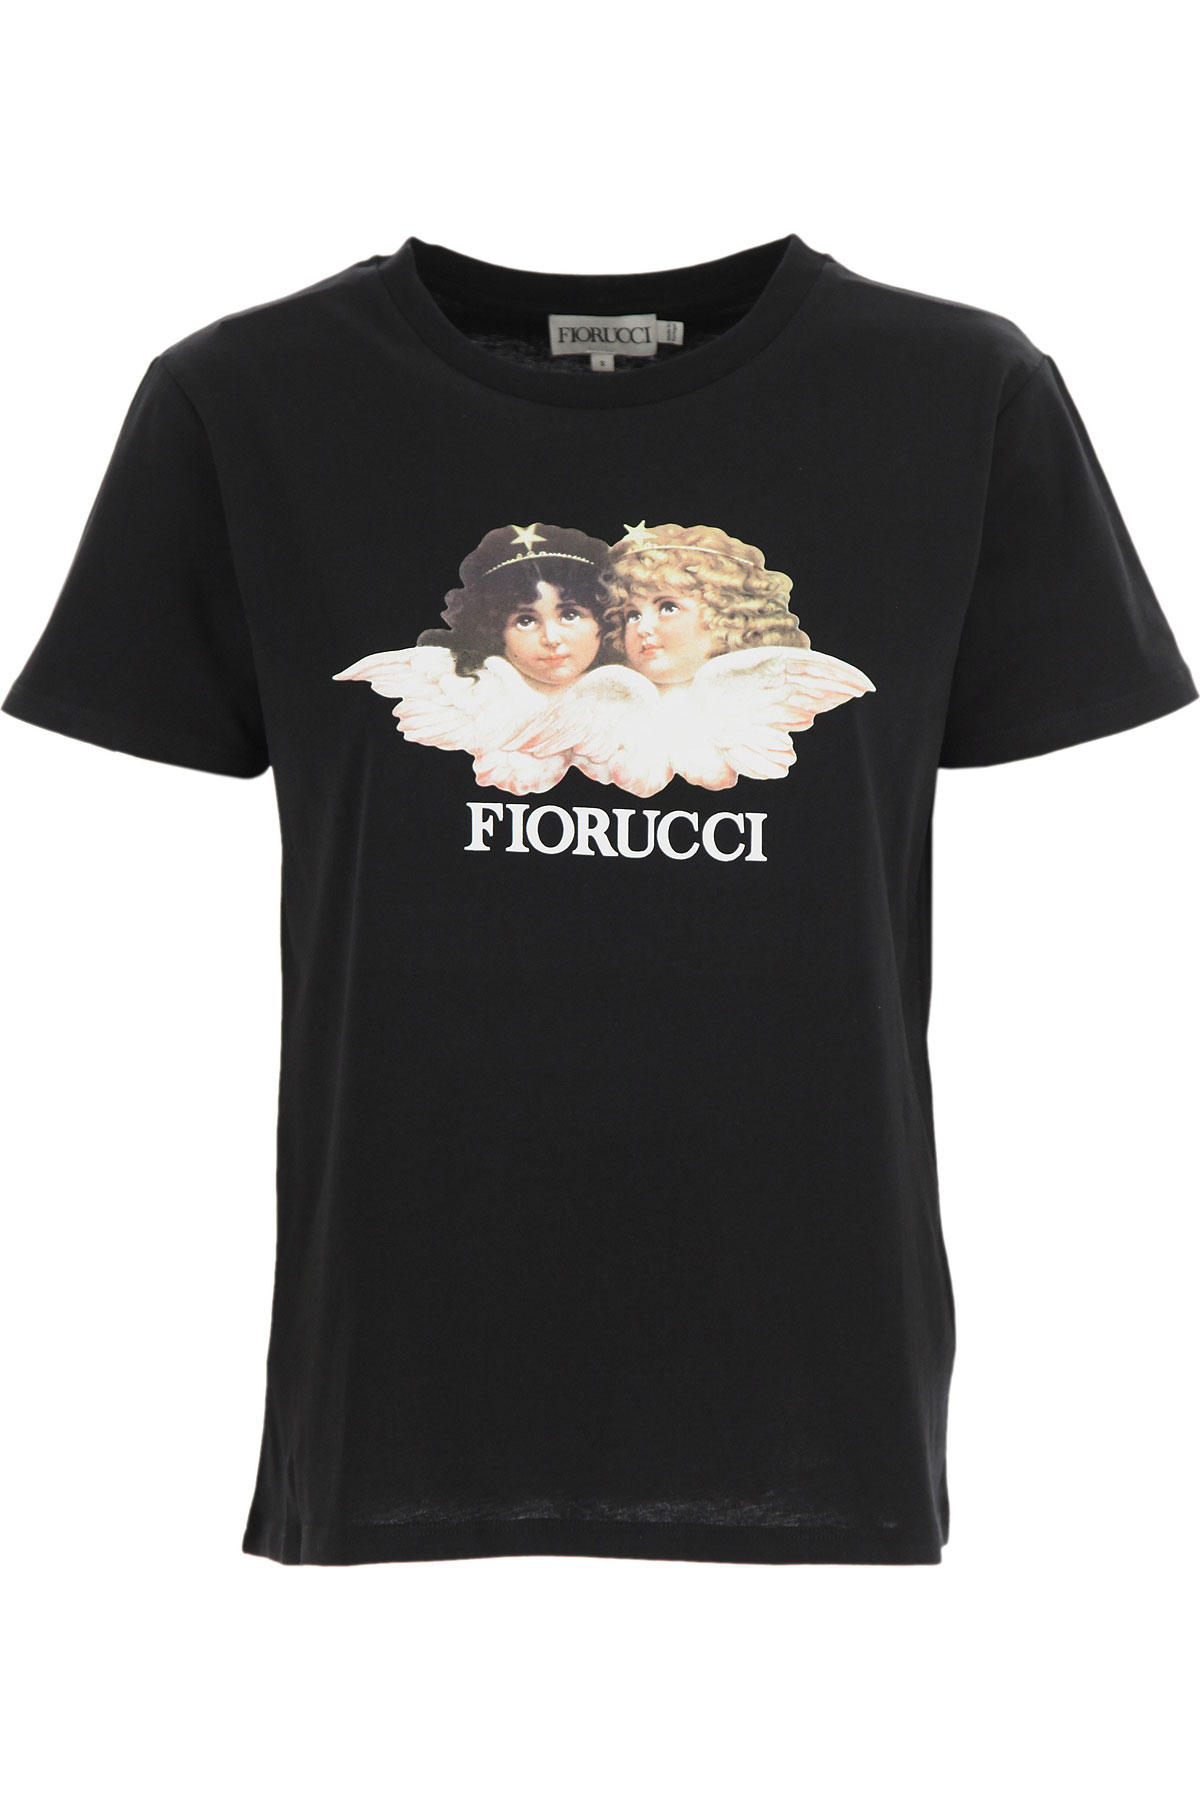 Womens Clothing Fiorucci, Style code: wwtsvancjbk-black-